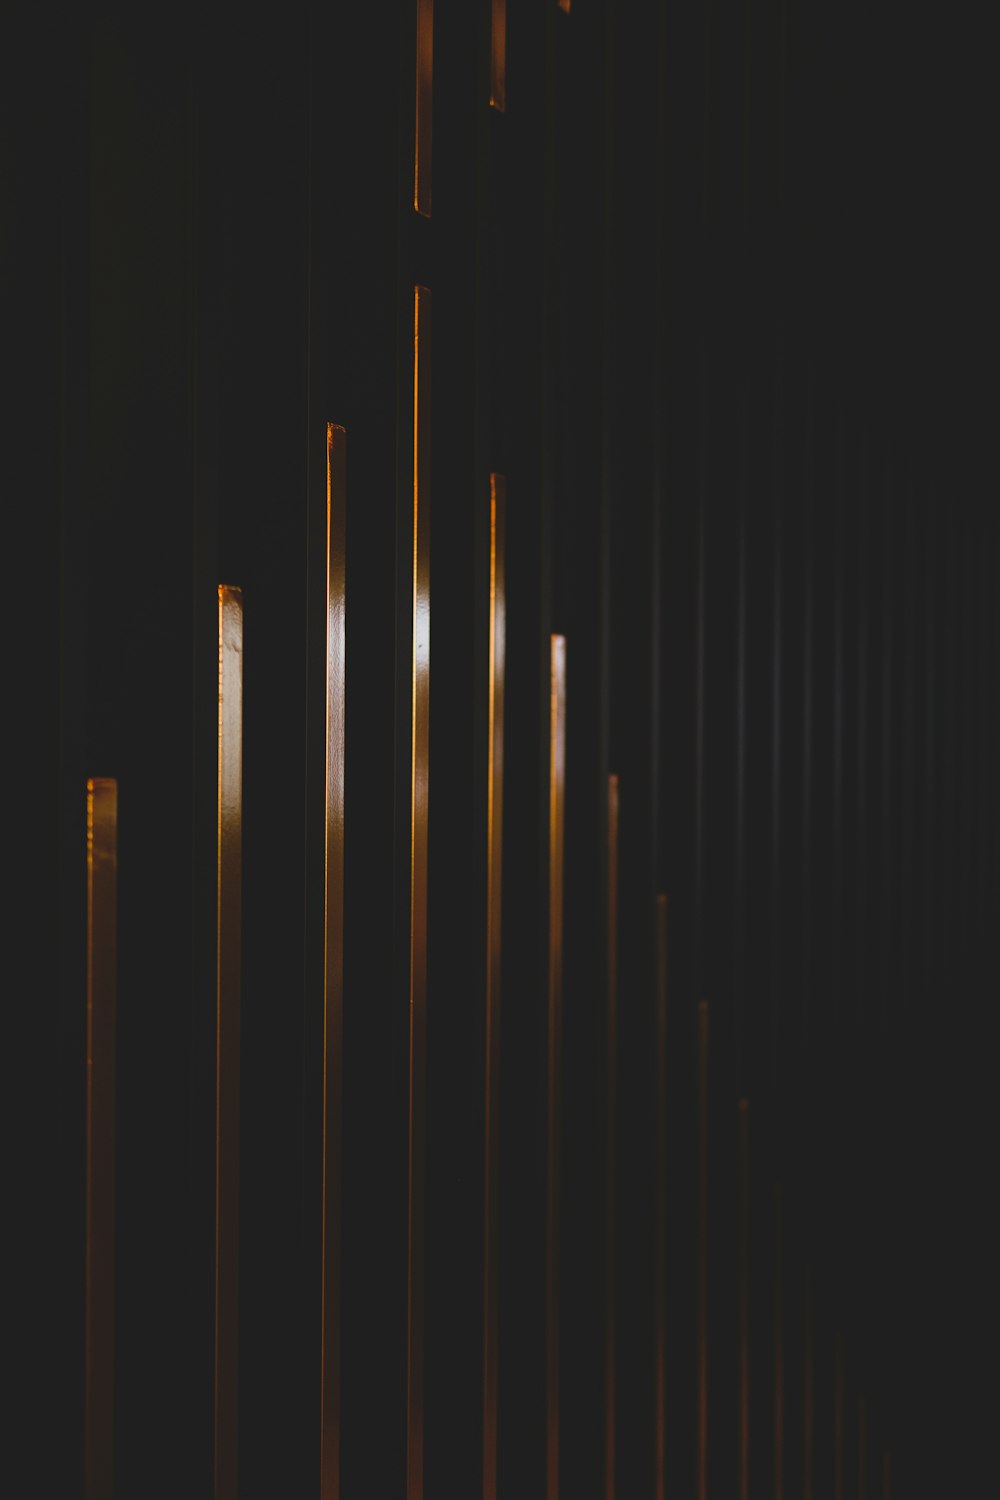 a row of metal poles in a dark room